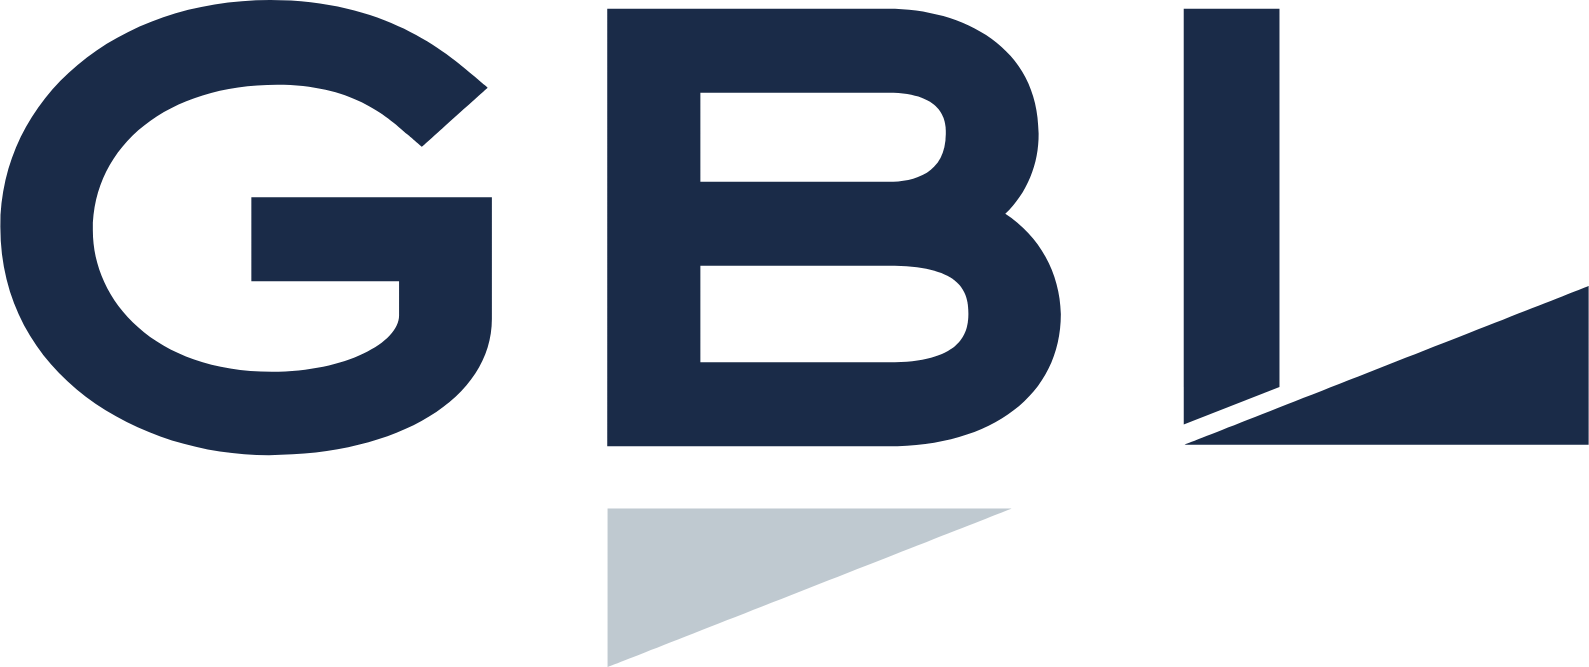 GBL logo (transparent PNG)